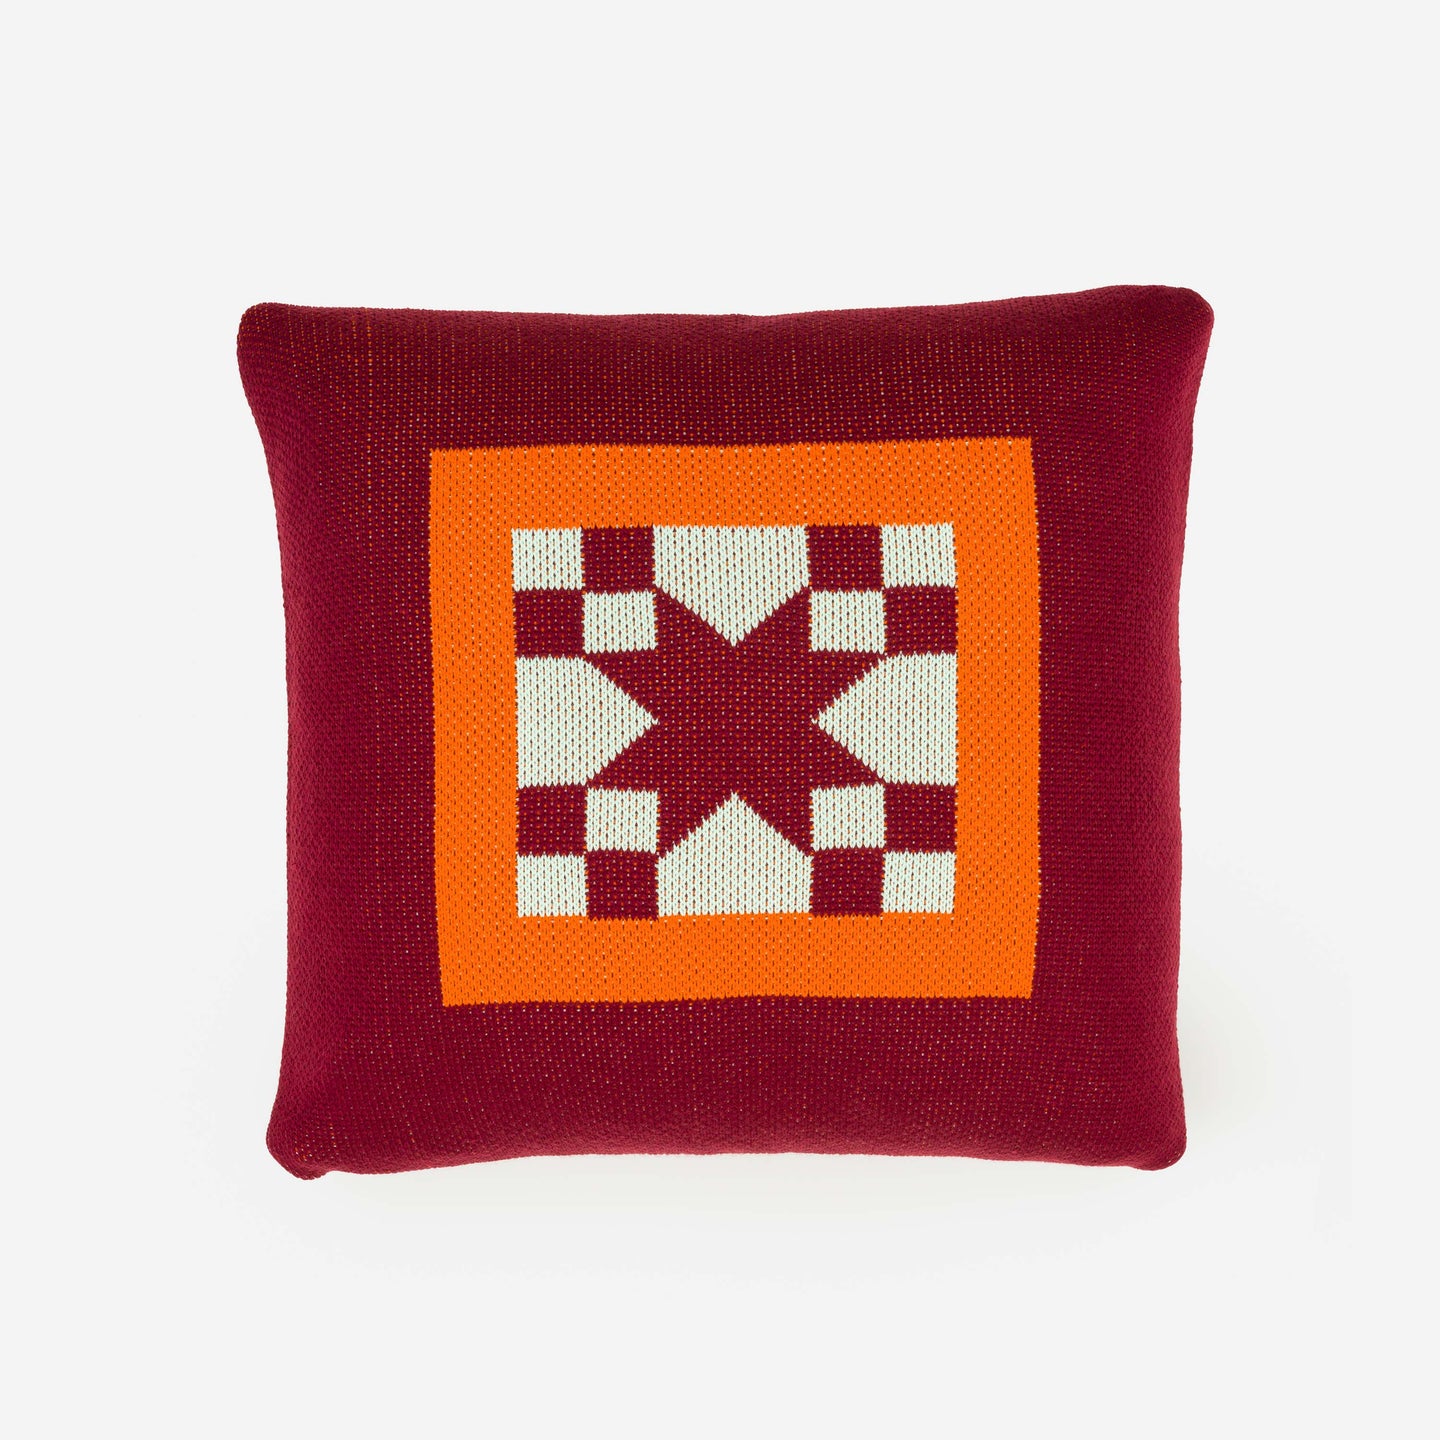 Quilt Block Pillow Case Knit